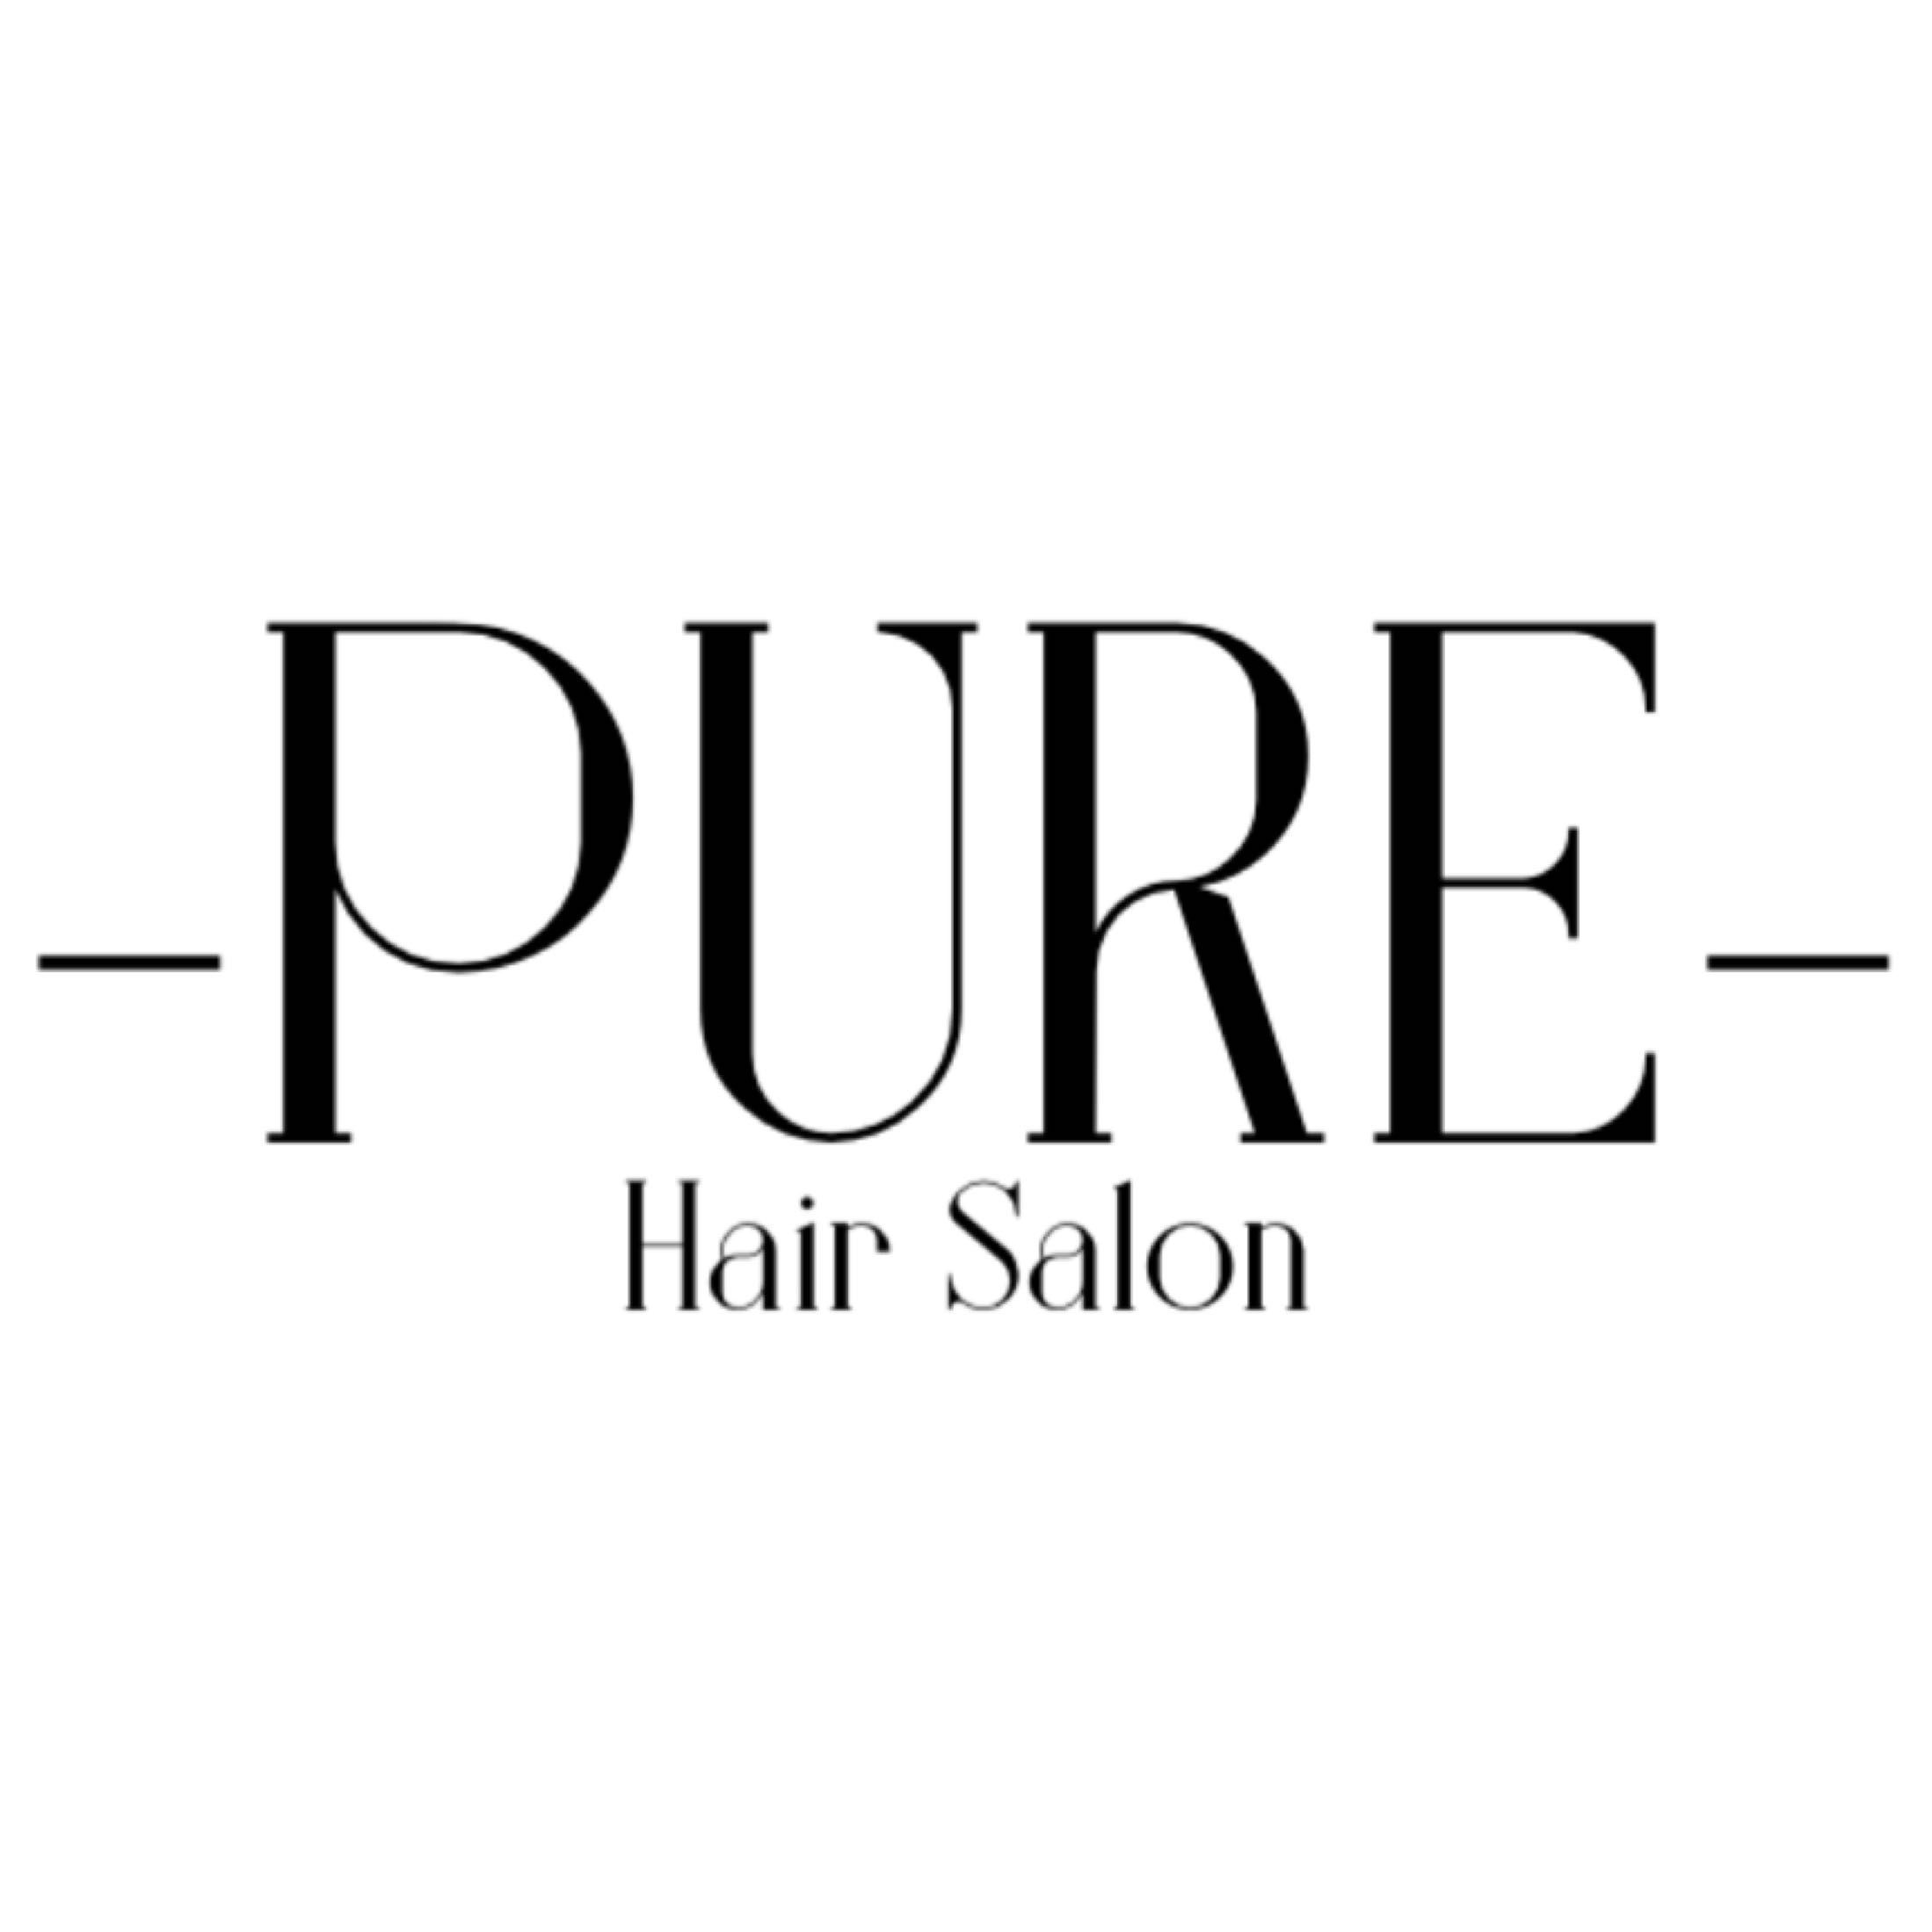 Pure Hair Salon, Wschodnia 23, 90-001, Łódź